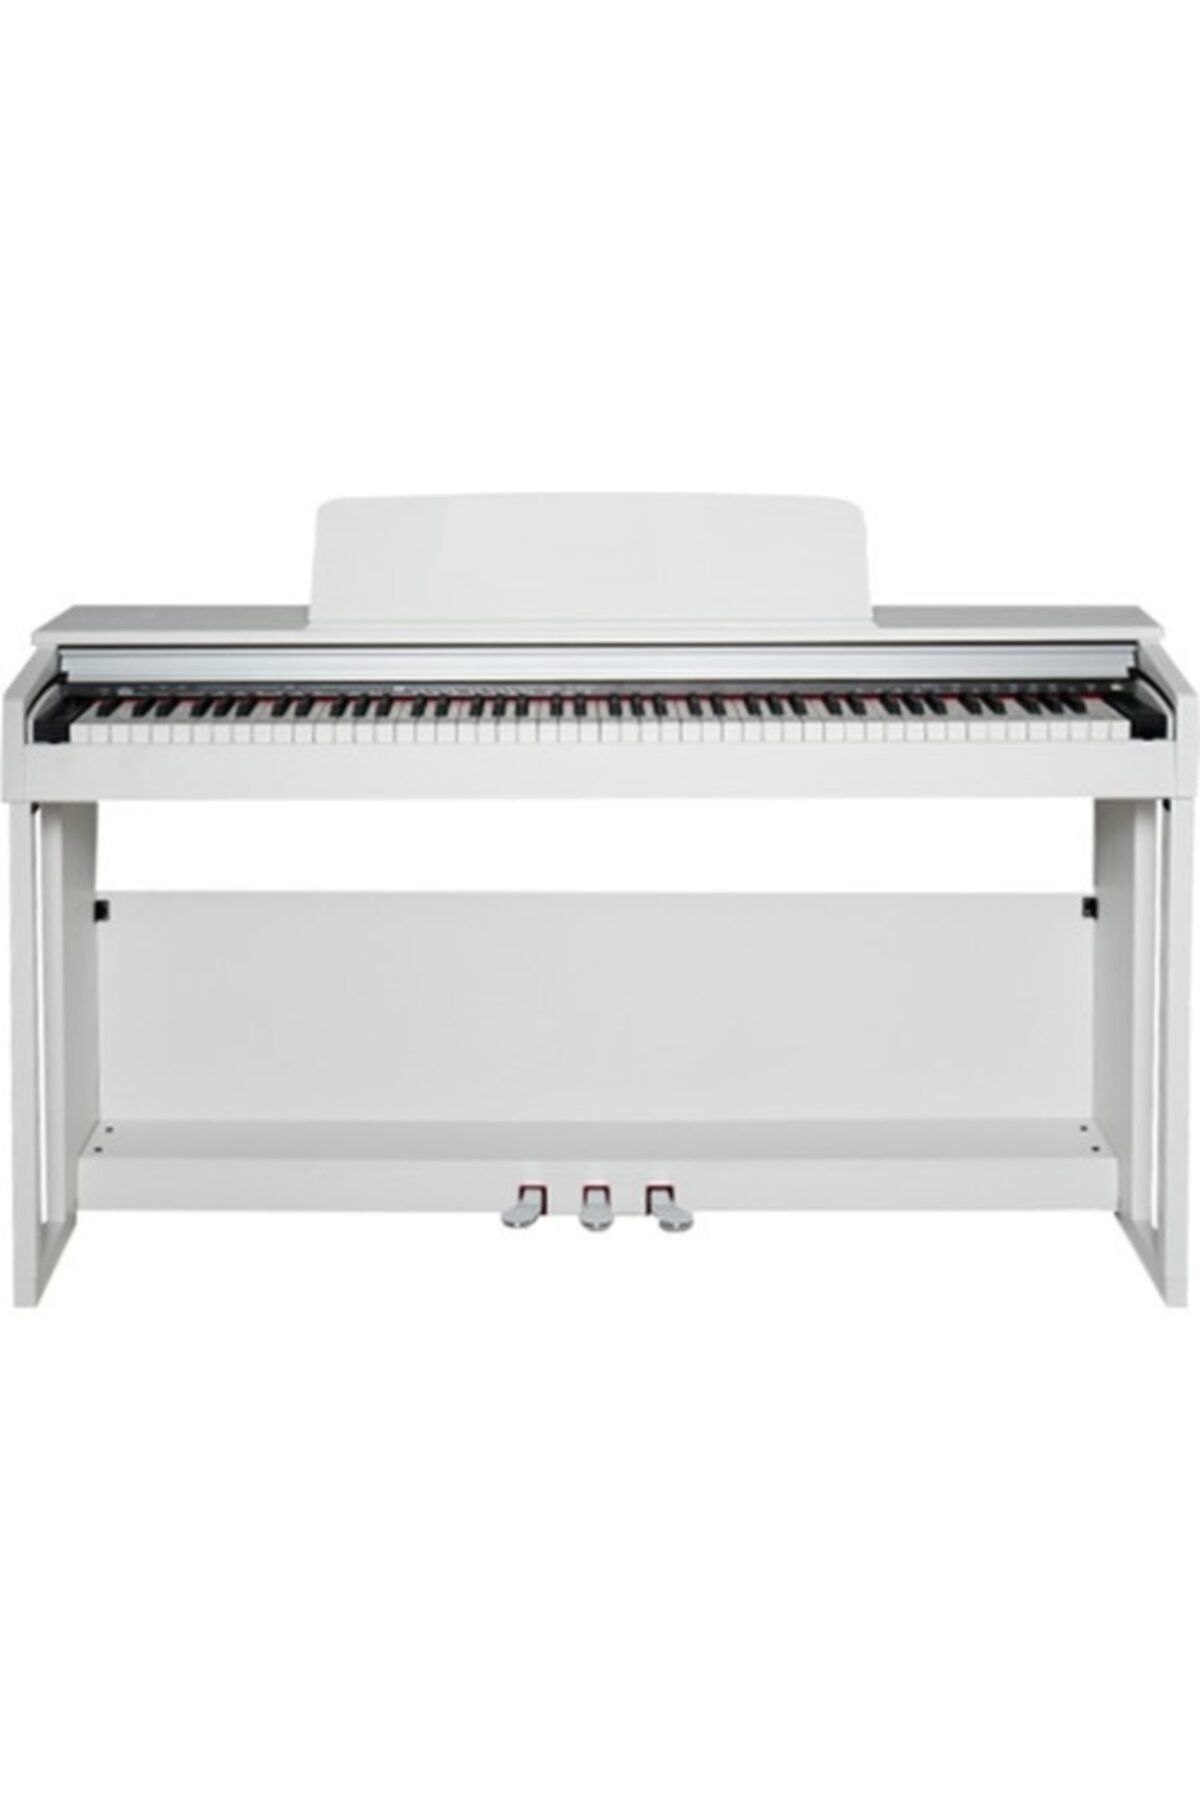 Nemesis Dk-480wht Model 192 Polofony Yeni Model Dijital Piyano